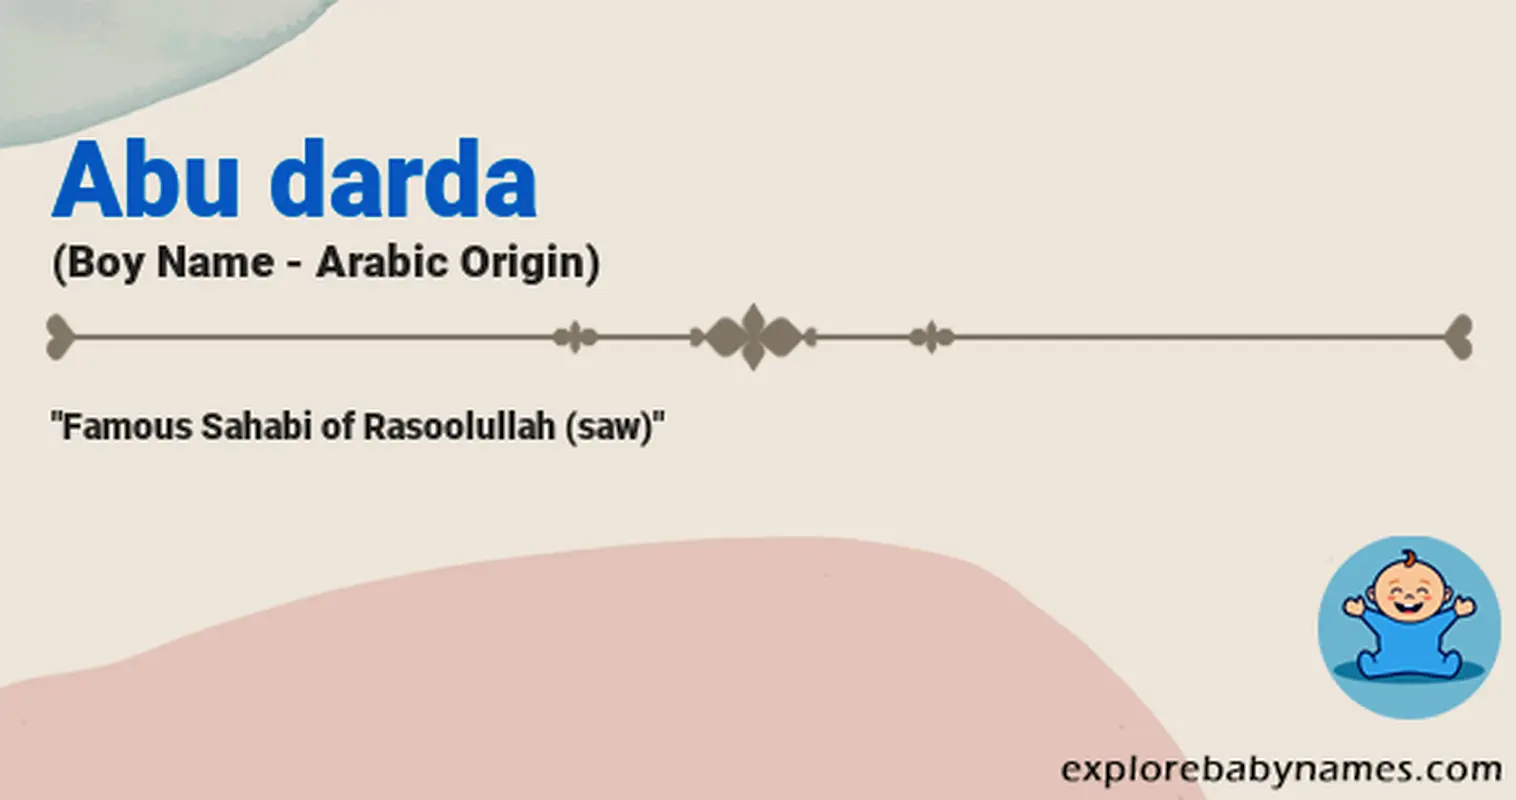 Meaning of Abu darda